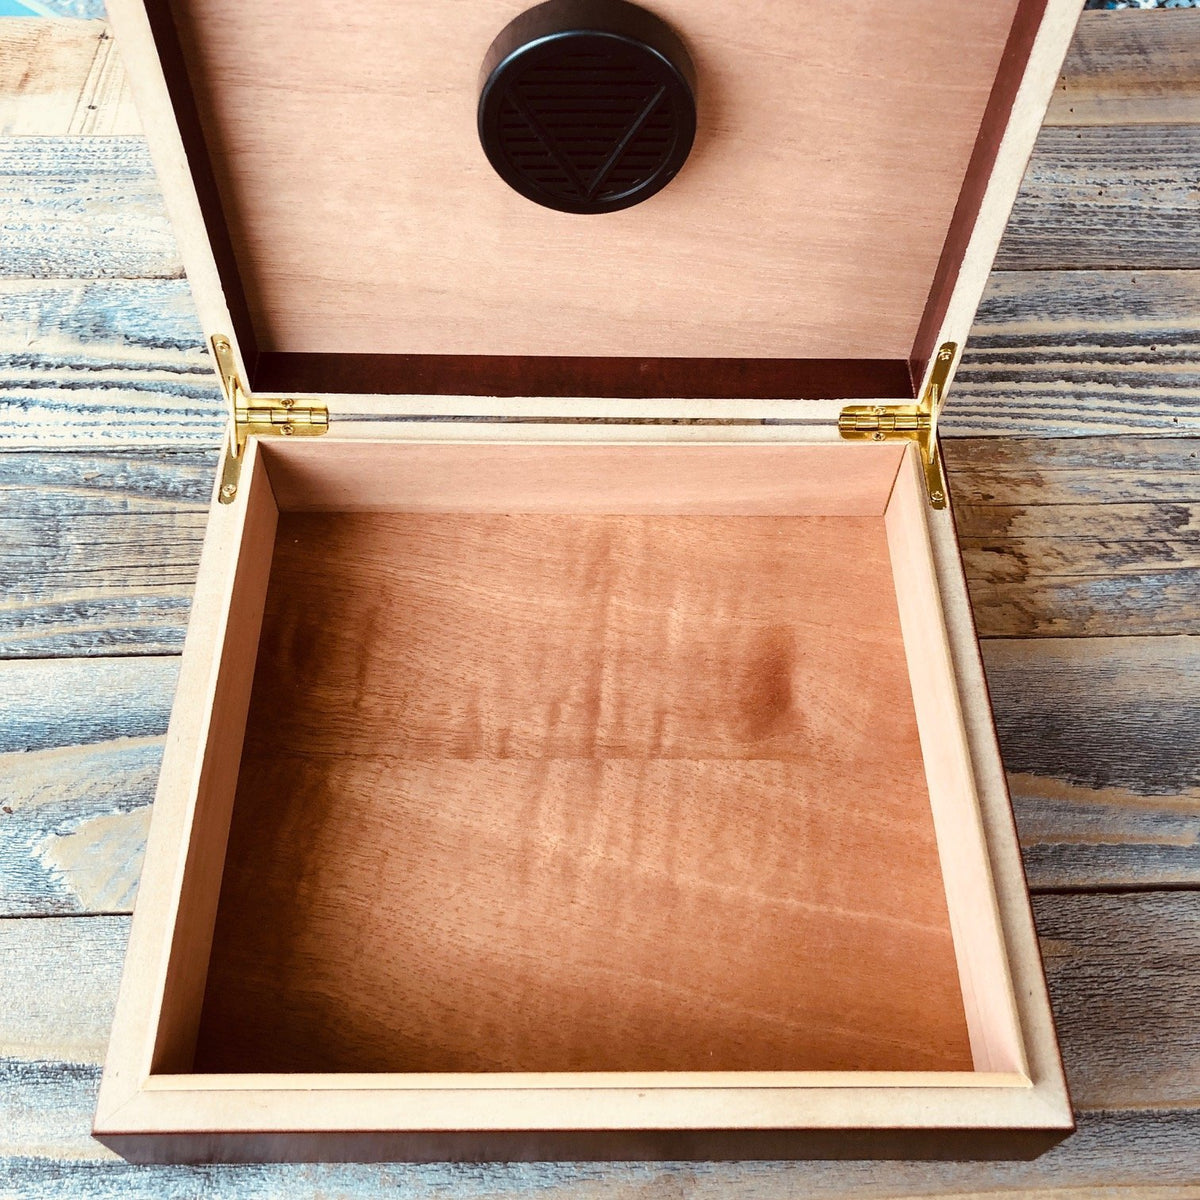 Groomsmen Cigar Box Set with Cigar Holder, Lighter, Cutter, and Flask -  Groovy Groomsmen Gifts